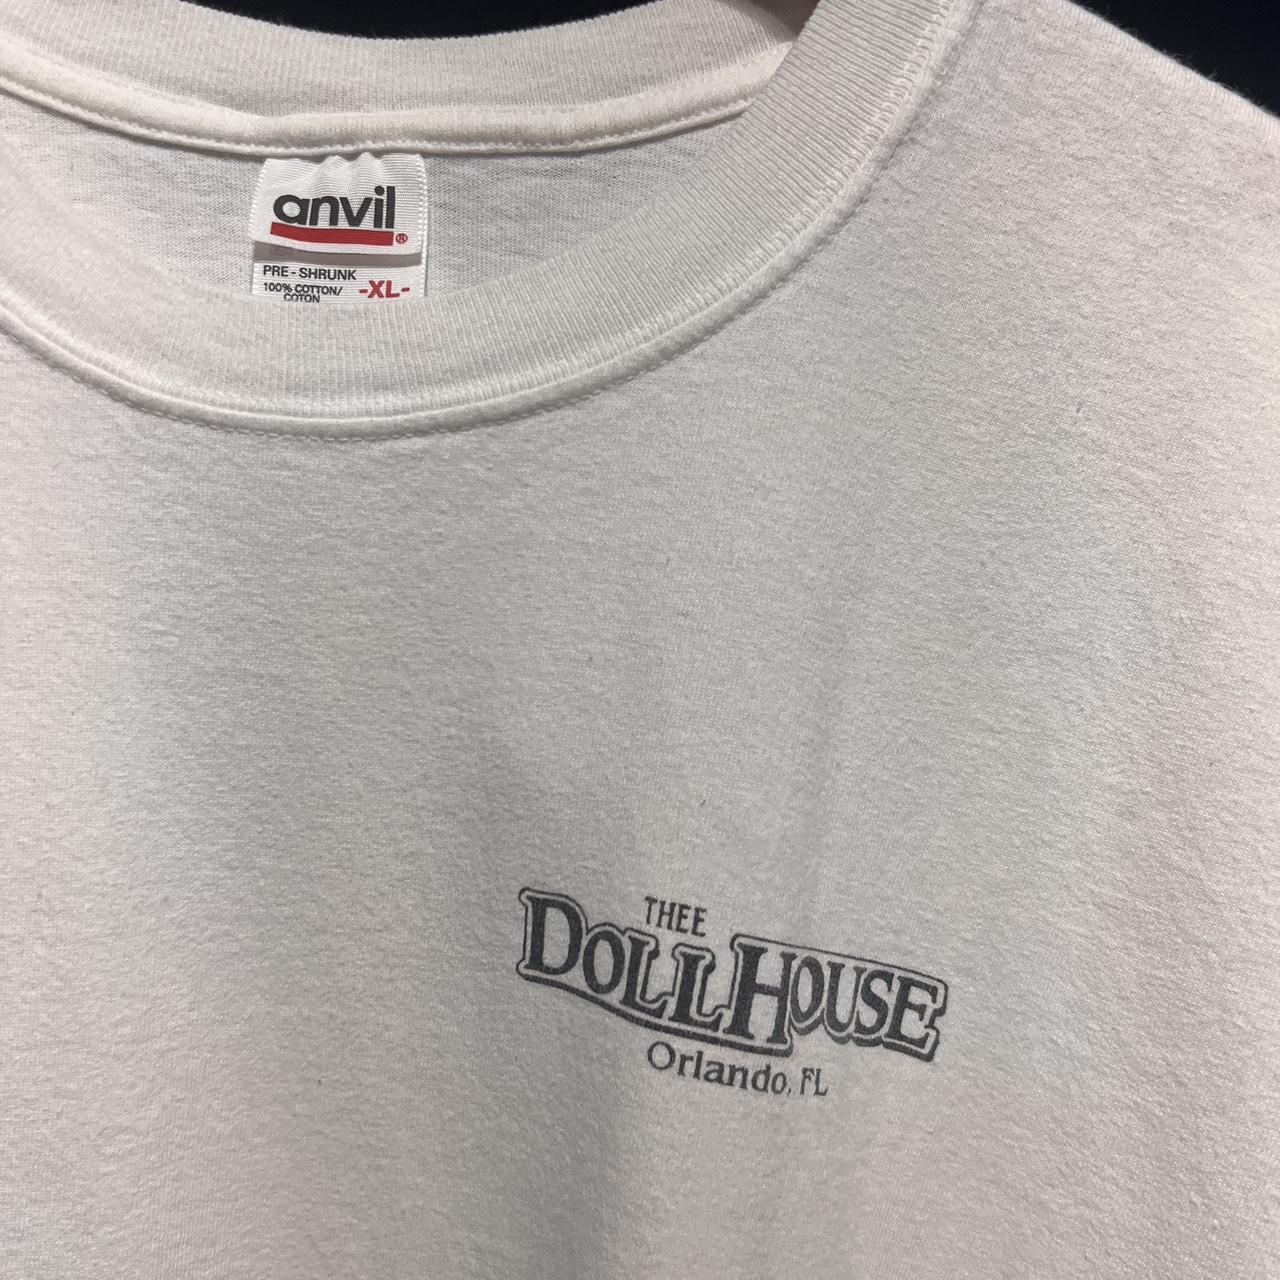 Dollhouse Men's White T-shirt (3)